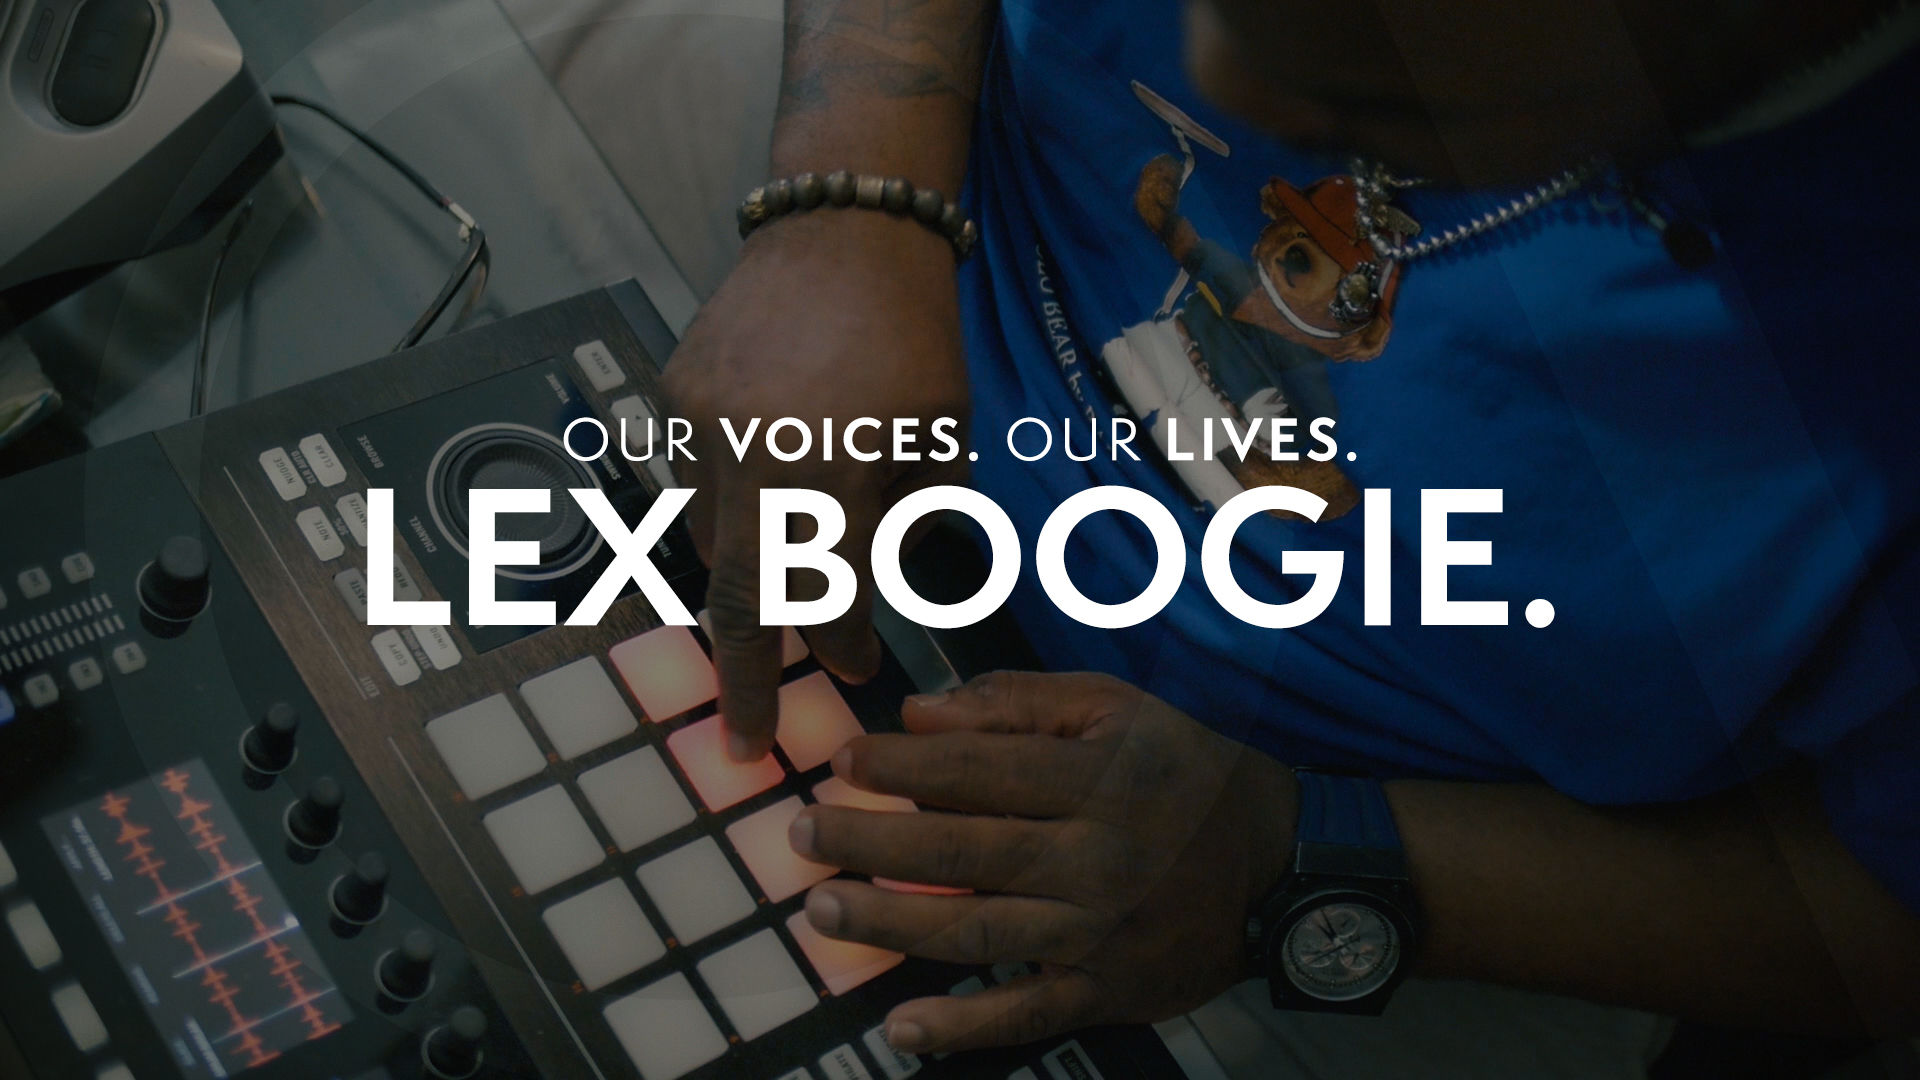 Our Voices. Our Lives. presents LEX BOOGIE.